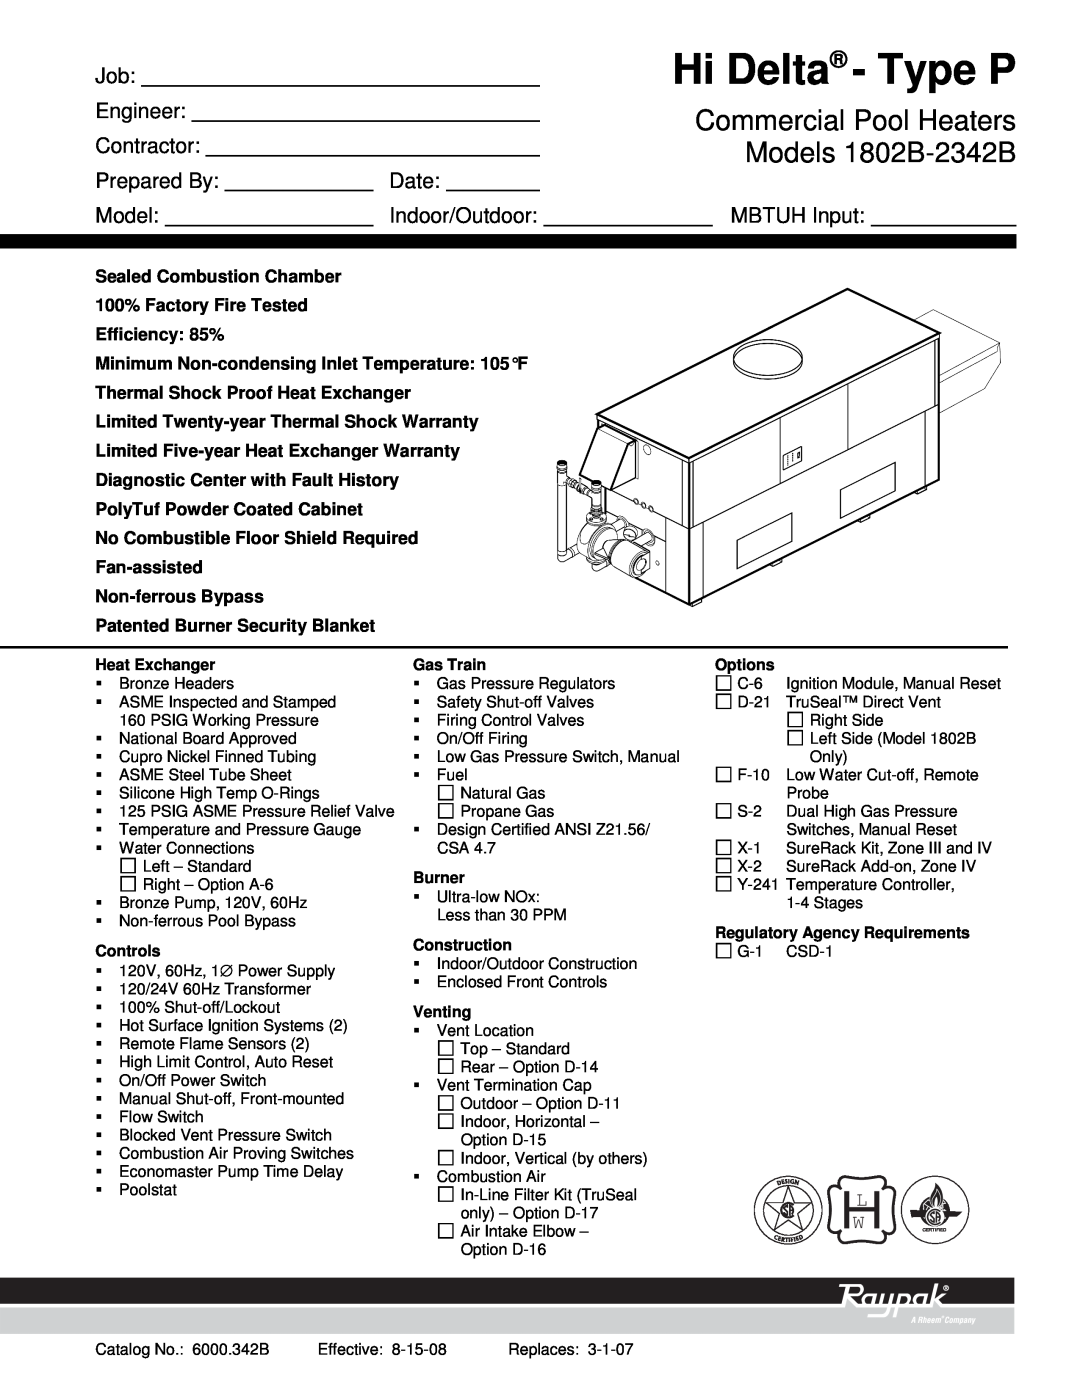 Raypak warranty Hi Delta - Type P, Commercial Pool Heaters, Models 1802B-2342B, Engineer, Contractor, Prepared By, Date 